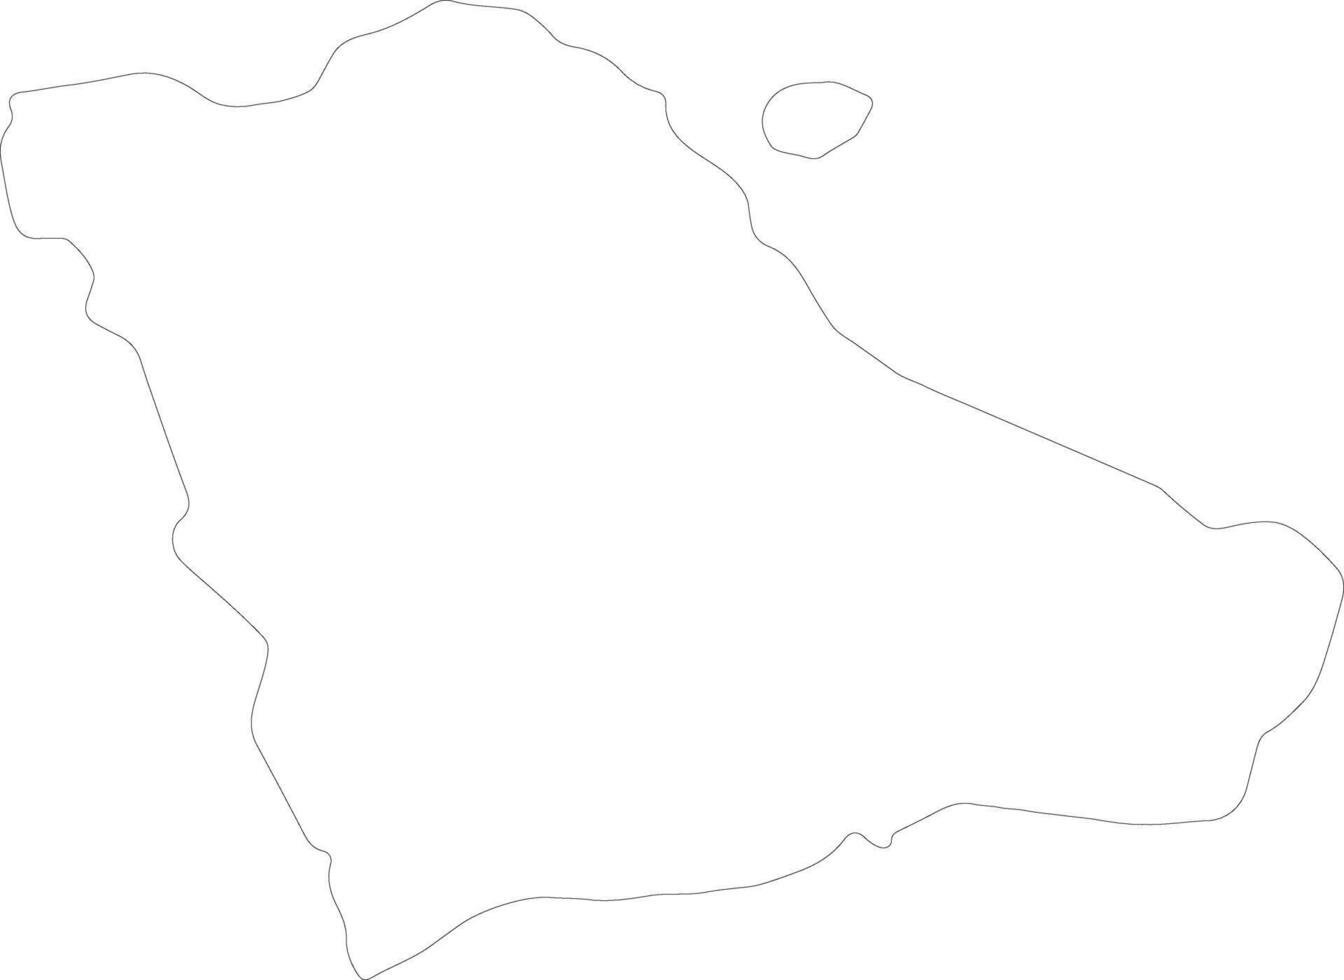 gegharkunik Armênia esboço mapa vetor